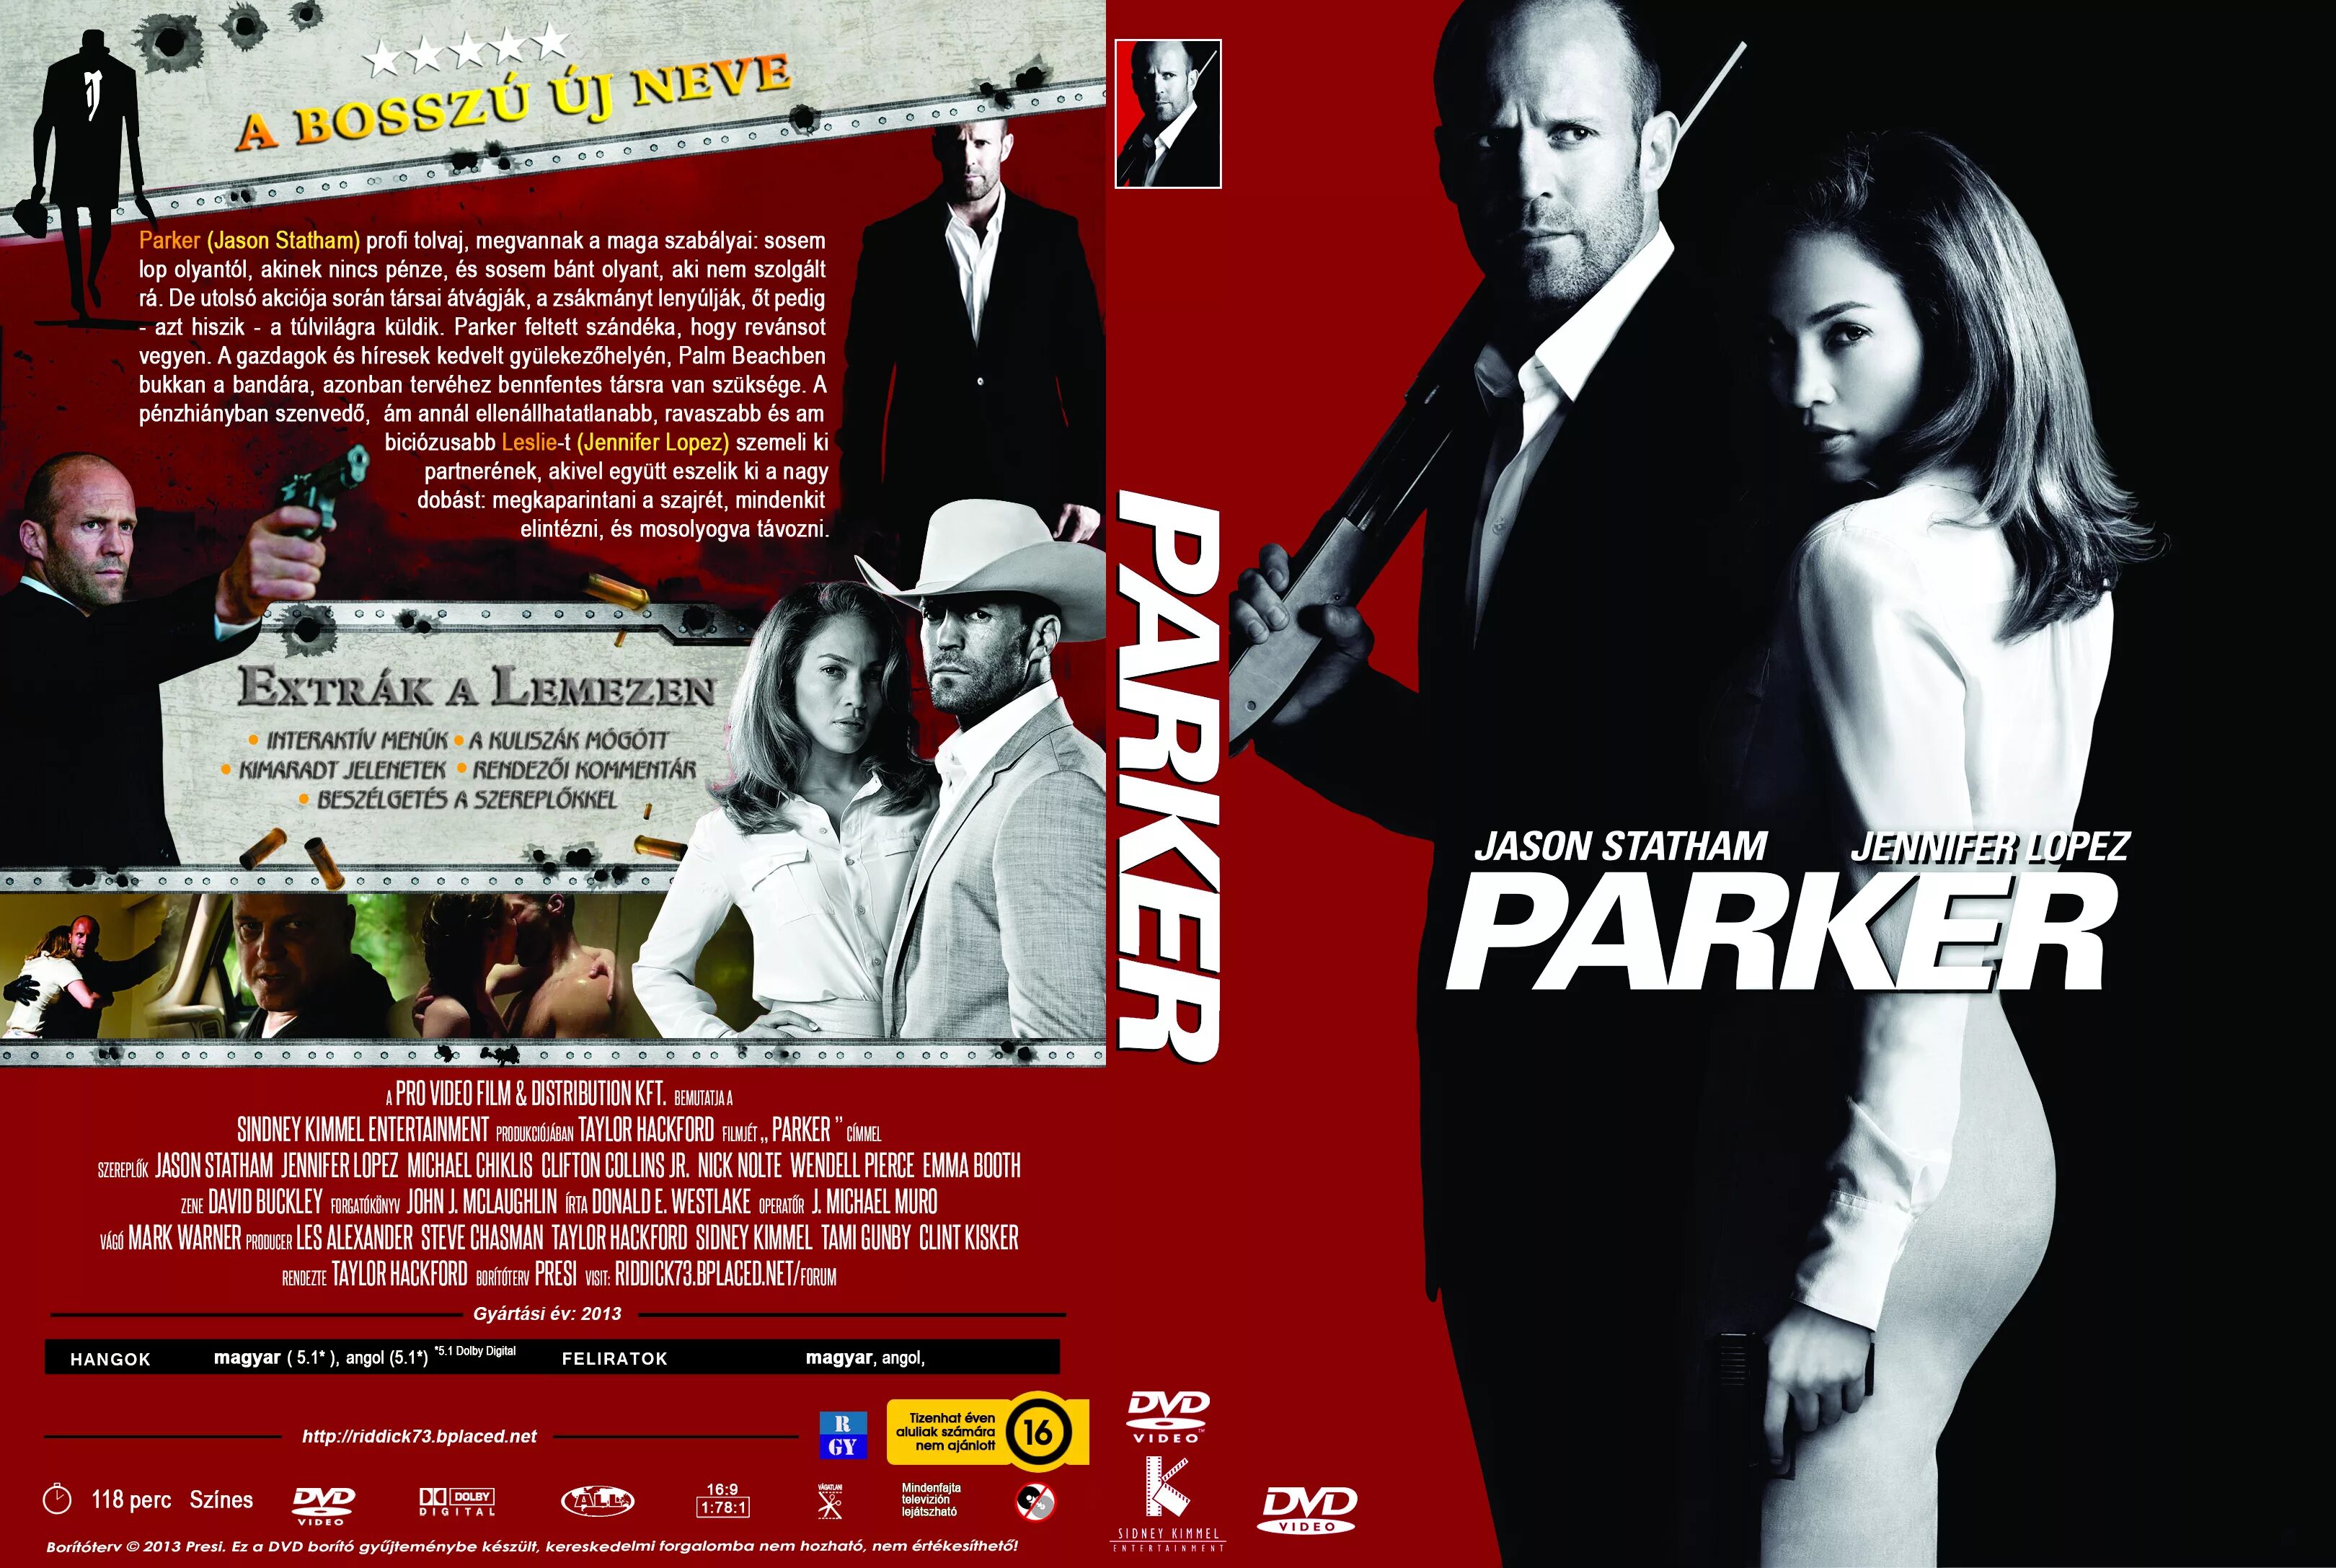 Паркер (2013) Cover. Паркер 2013 Постер. Parker, 2013 DVD Covers. Паркер 2013 обложки. 2012 обложка